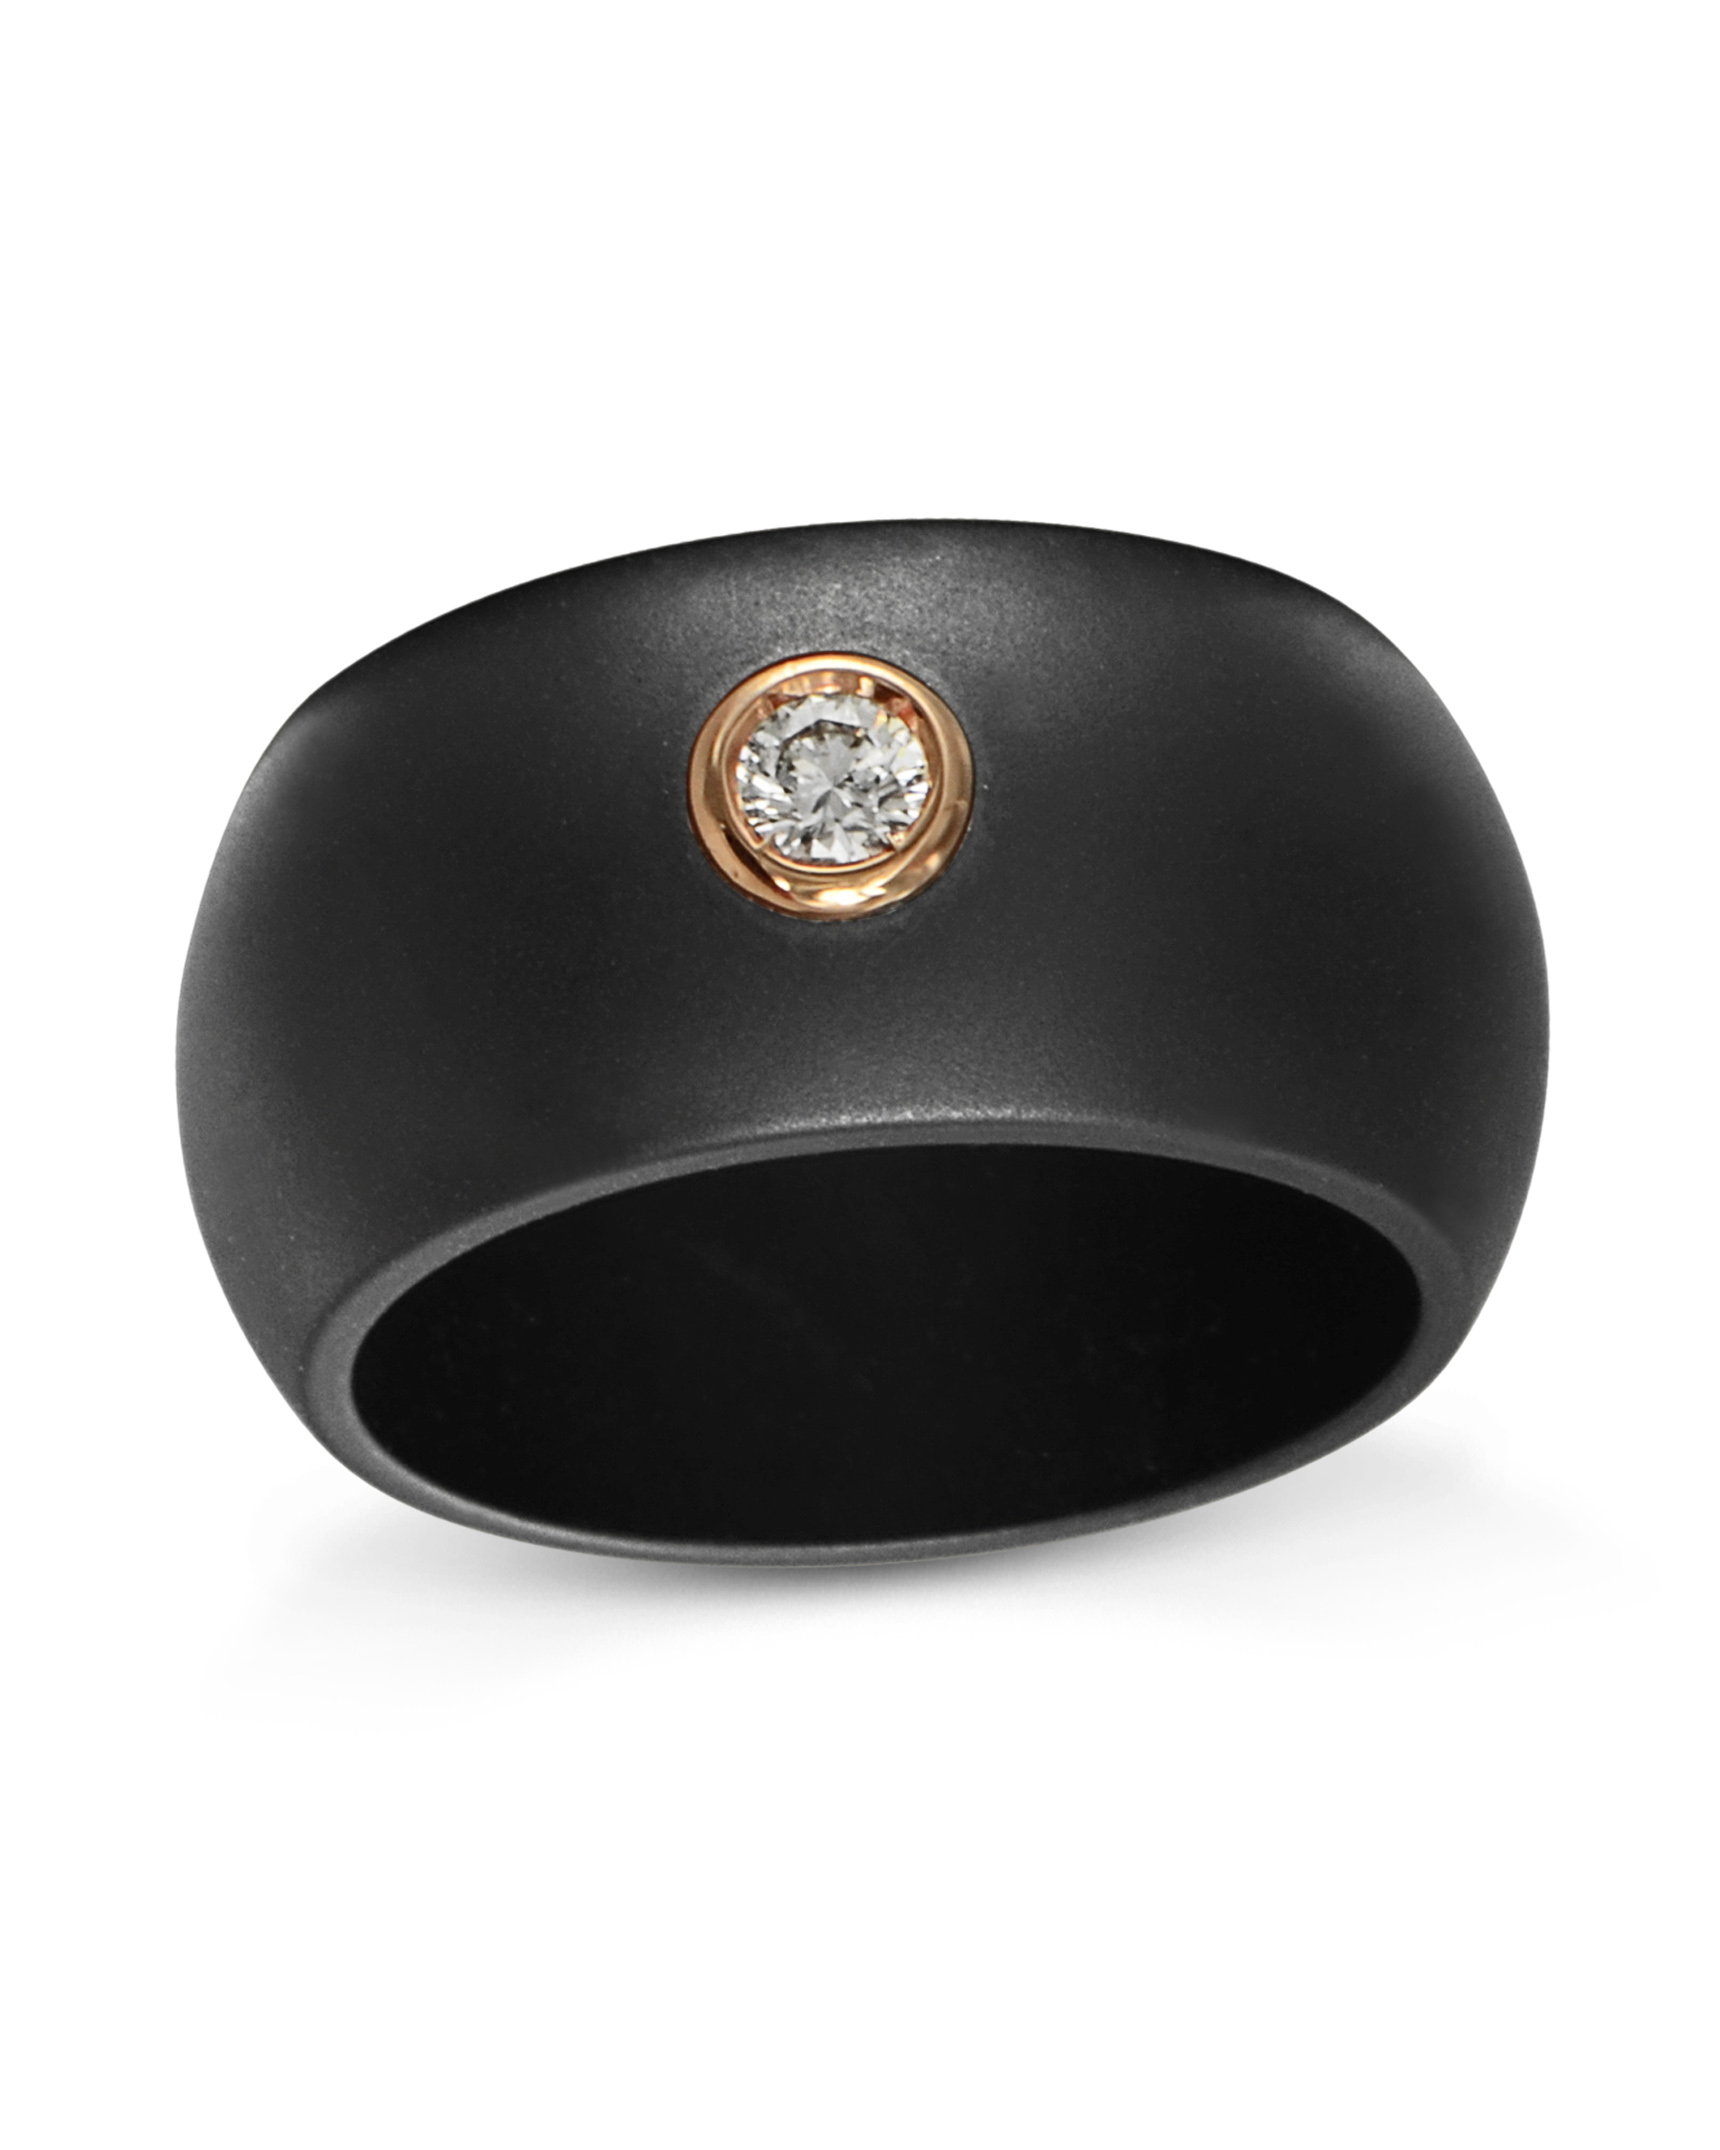 Buy BELLINA Black Matte Finger Ring For Boys and Men | Stylish and Trending Black  Matte Titanium Ring For Boys/Men/Gents at Amazon.in